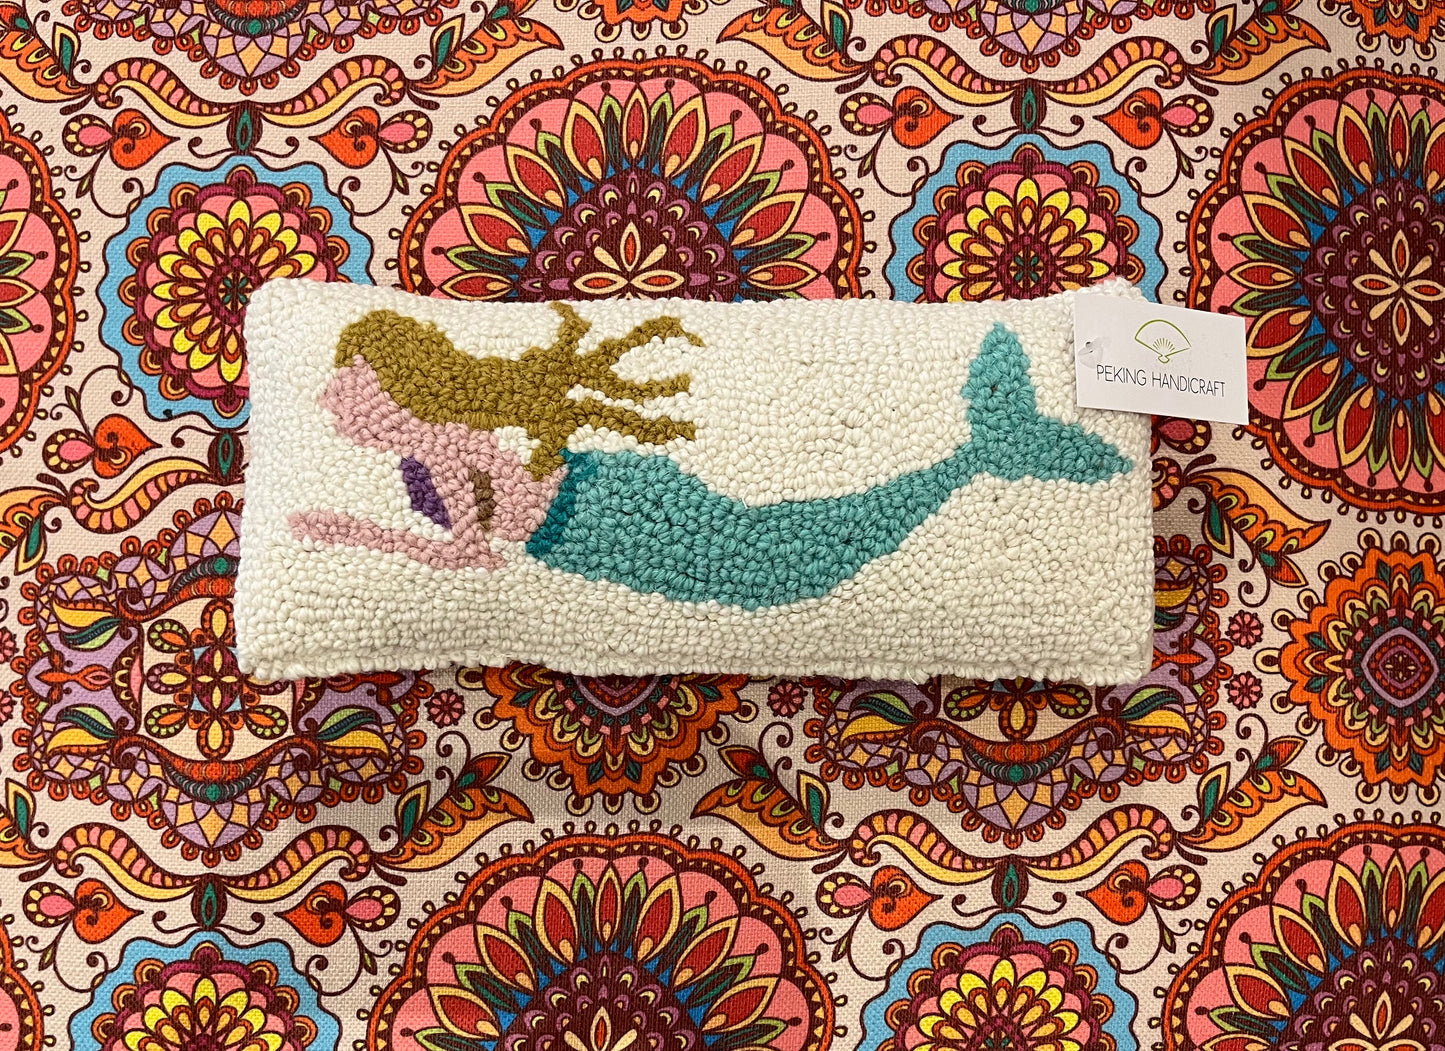 Mermaid Hook Pillow